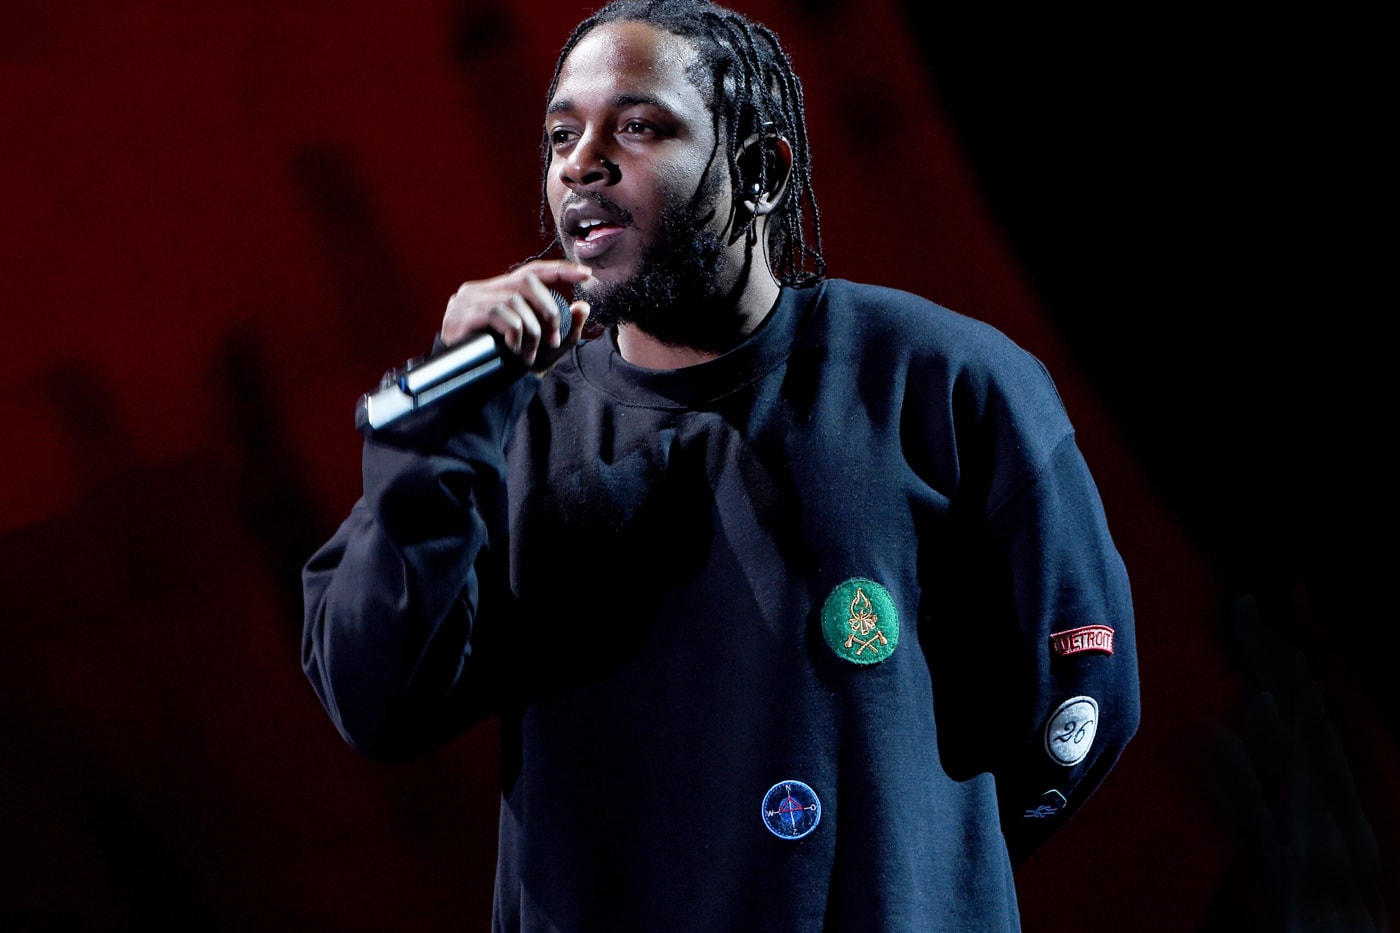 Kendrick Lamar's Statement Sneaker Style [PHOTOS] – Footwear News